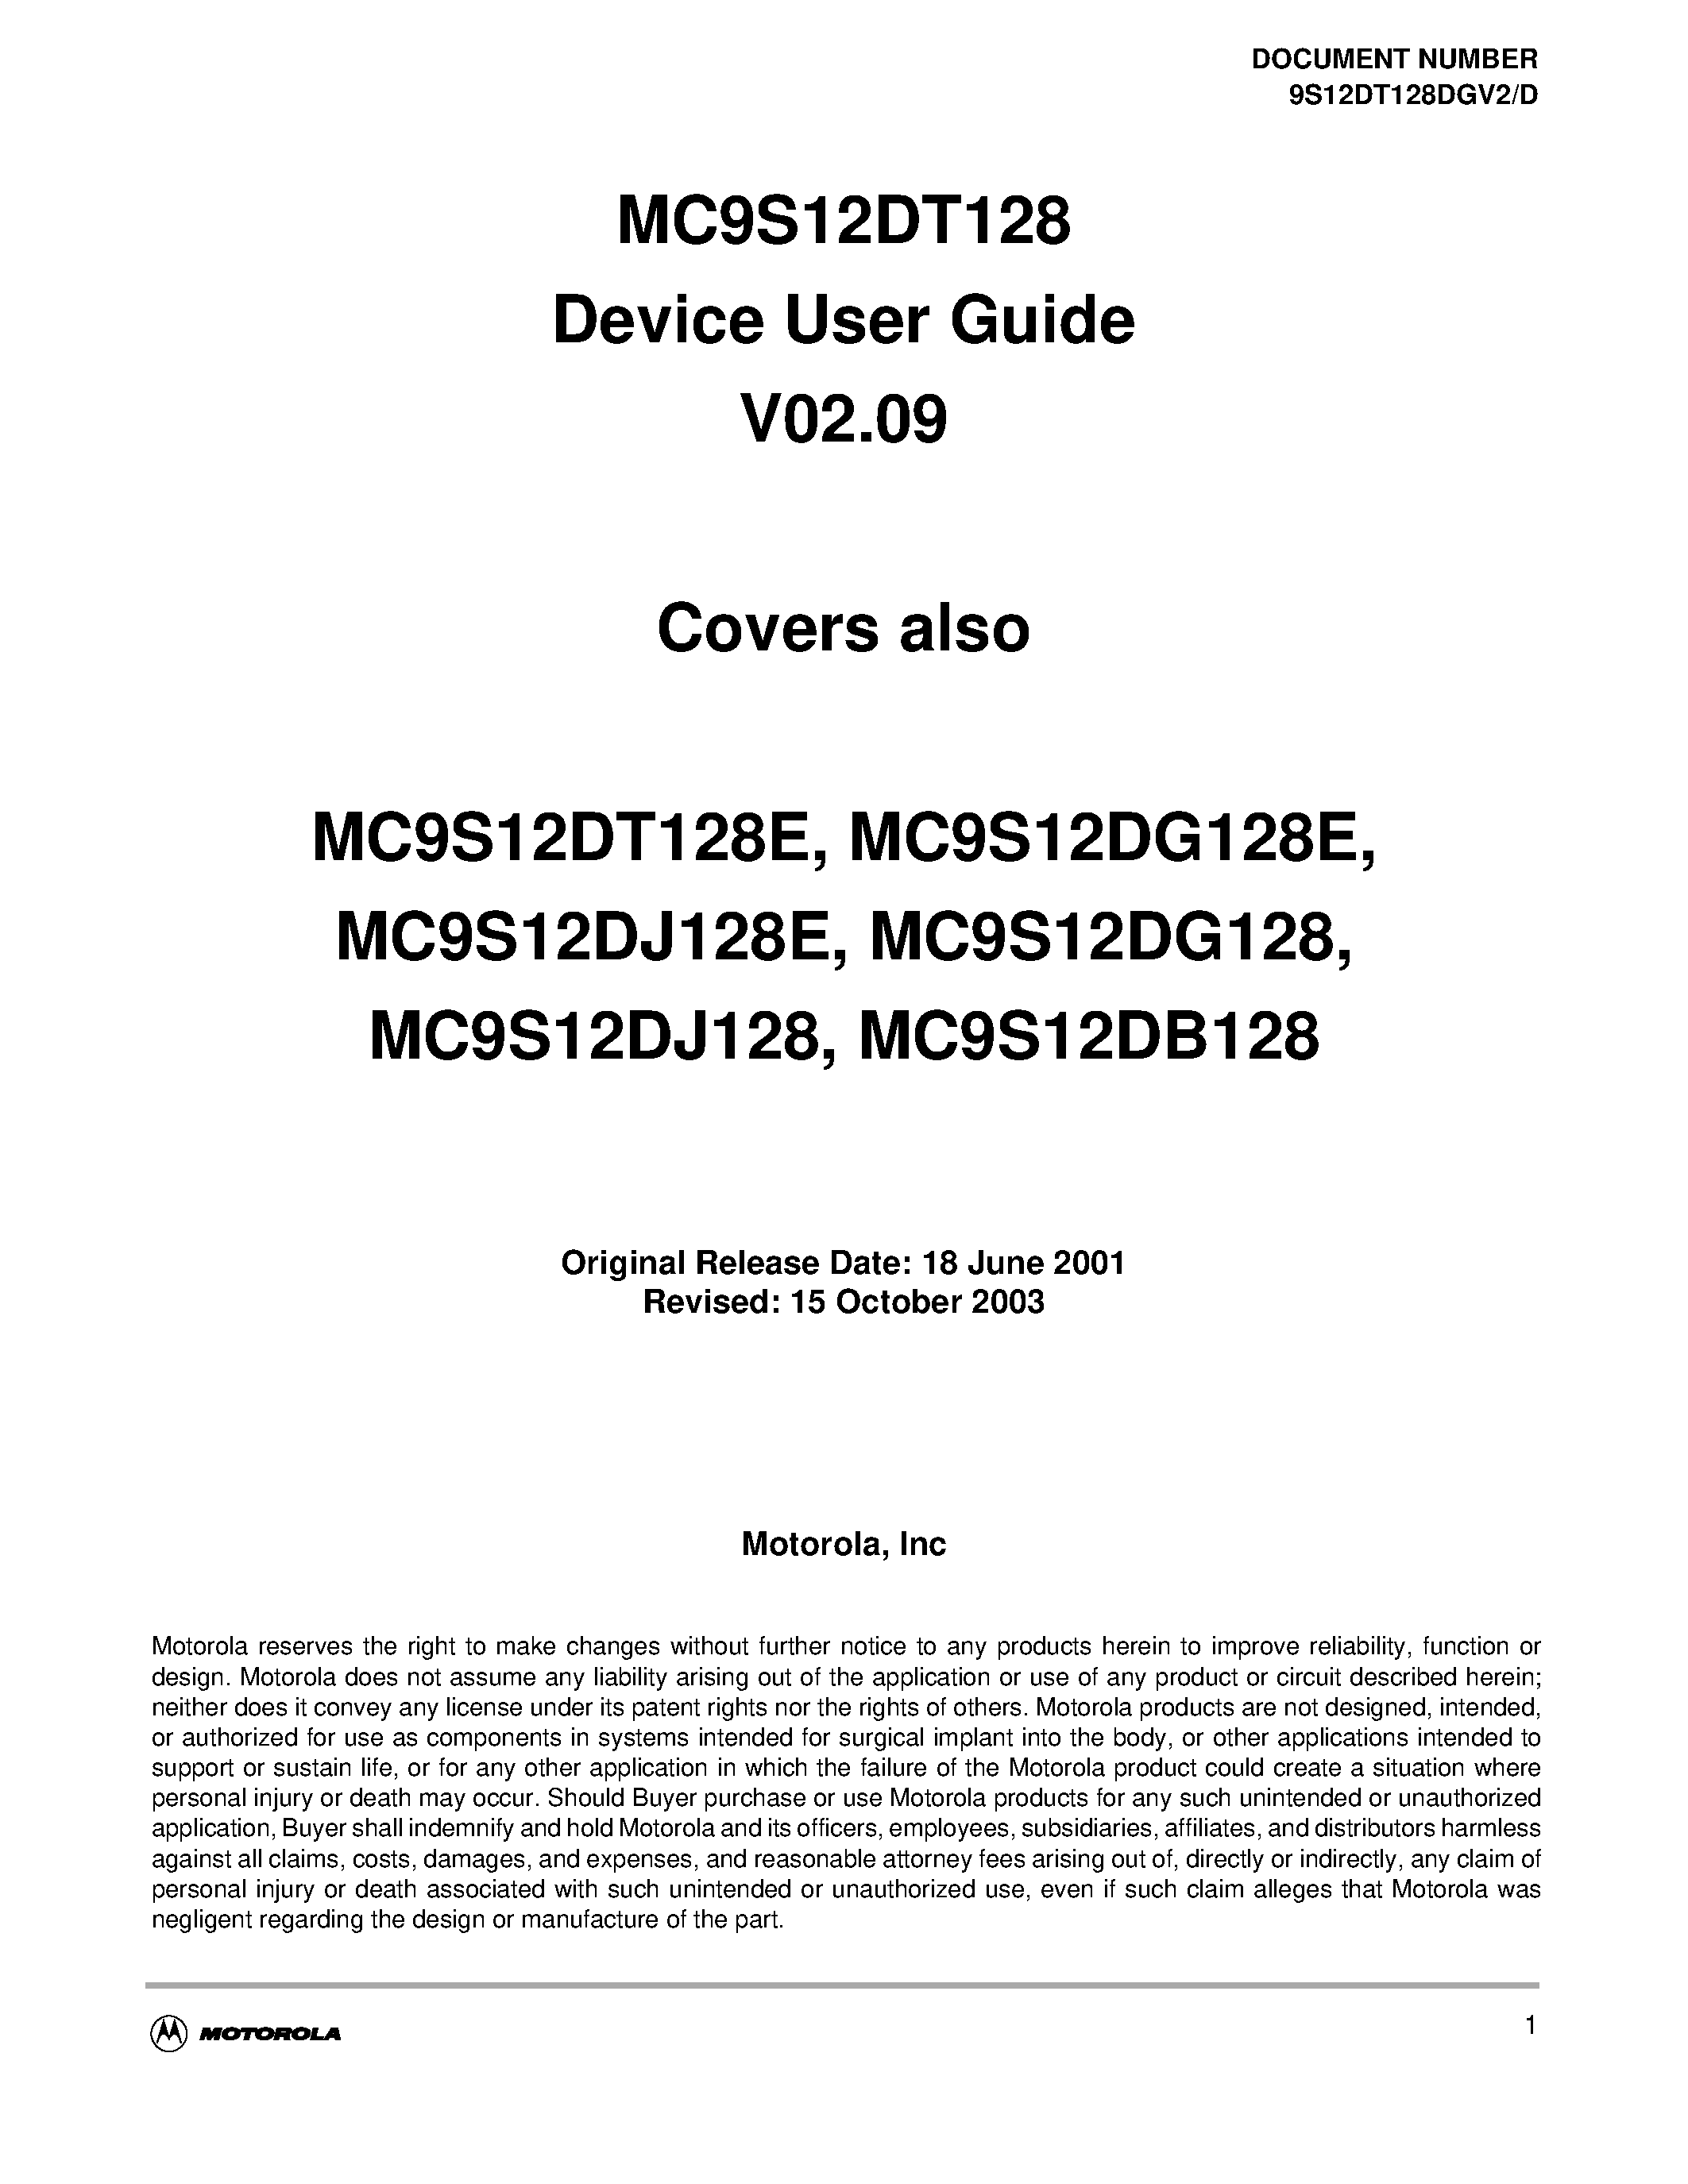 Datasheet S12DTB128PIMV2D - MC9S12DT128 Device User Guide V02.09 page 1